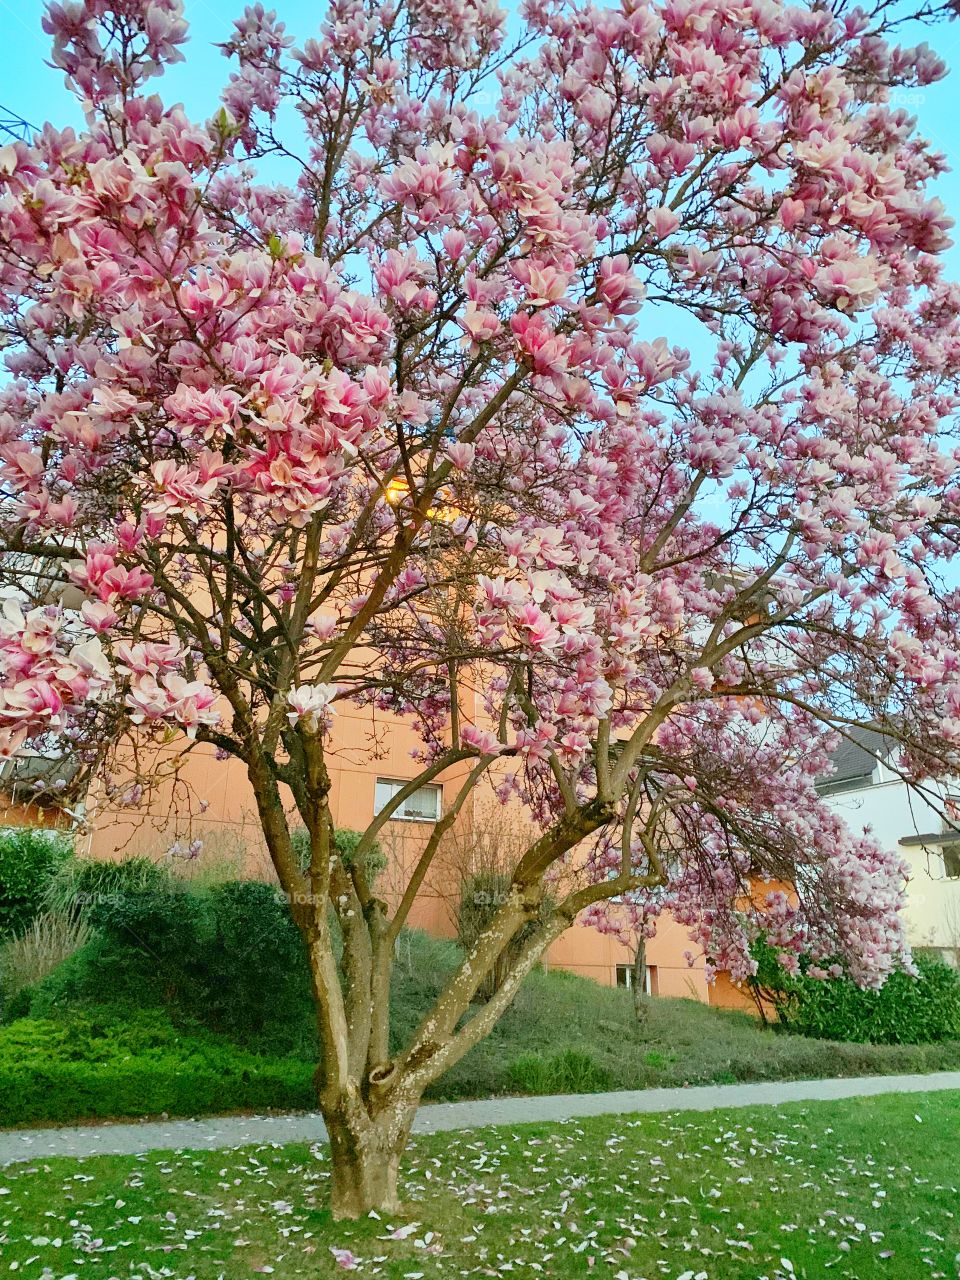 Pink magnolia flowering tree in Switzerland 